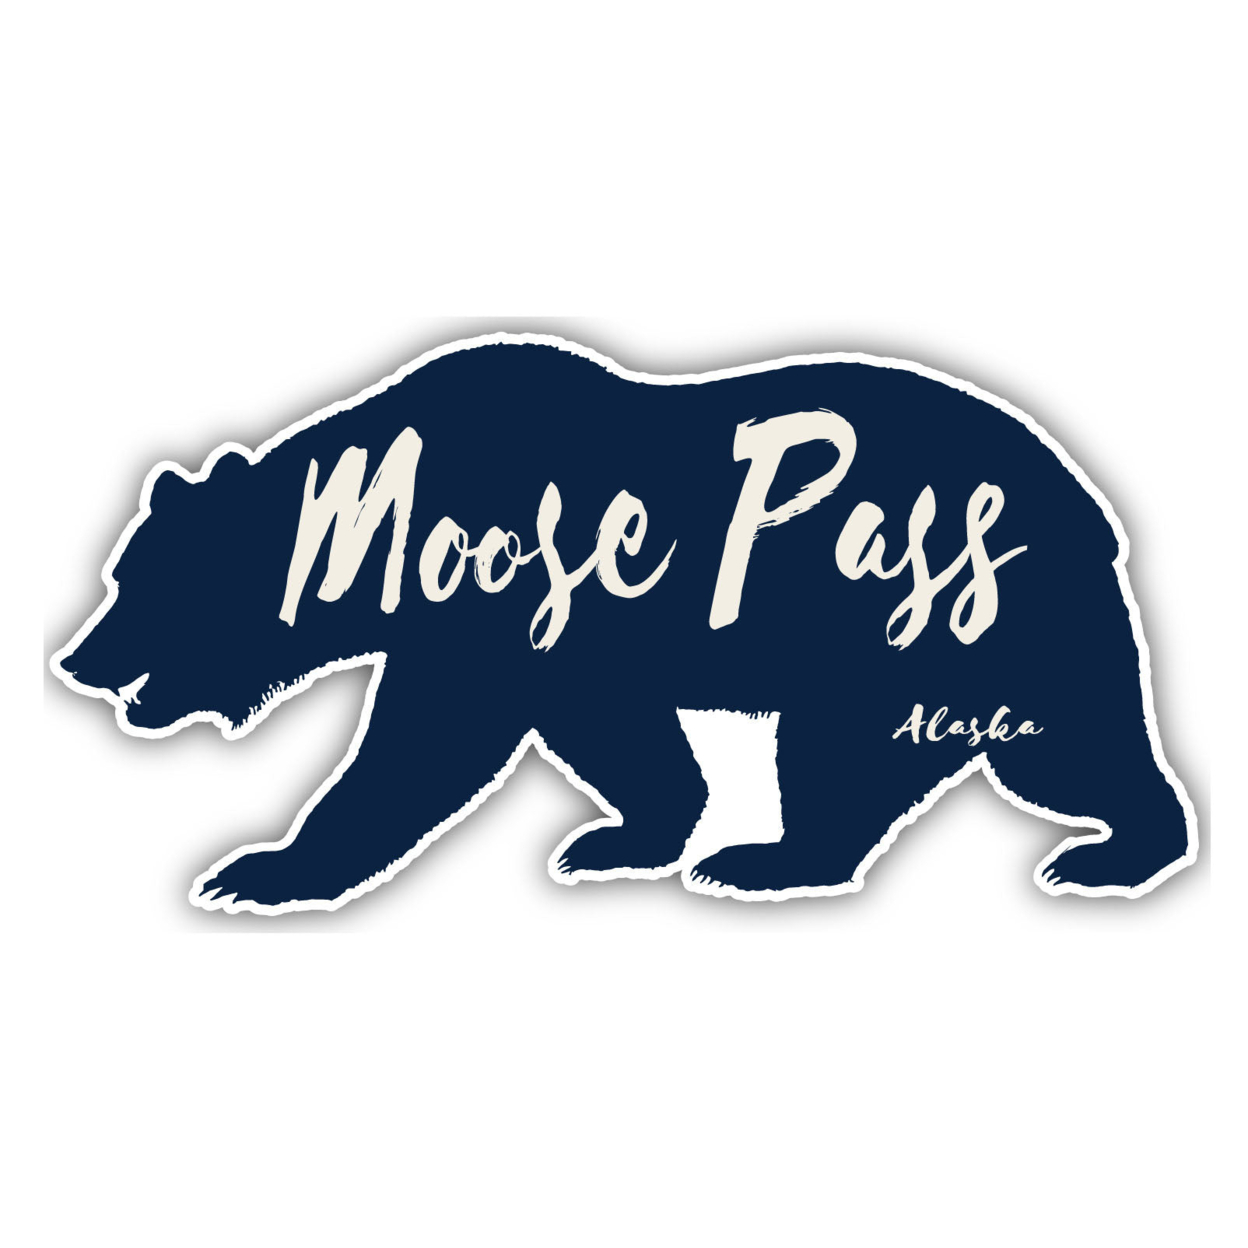 Moose Pass Alaska Souvenir Decorative Stickers (Choose Theme And Size) - Single Unit, 4-Inch, Adventures Awaits